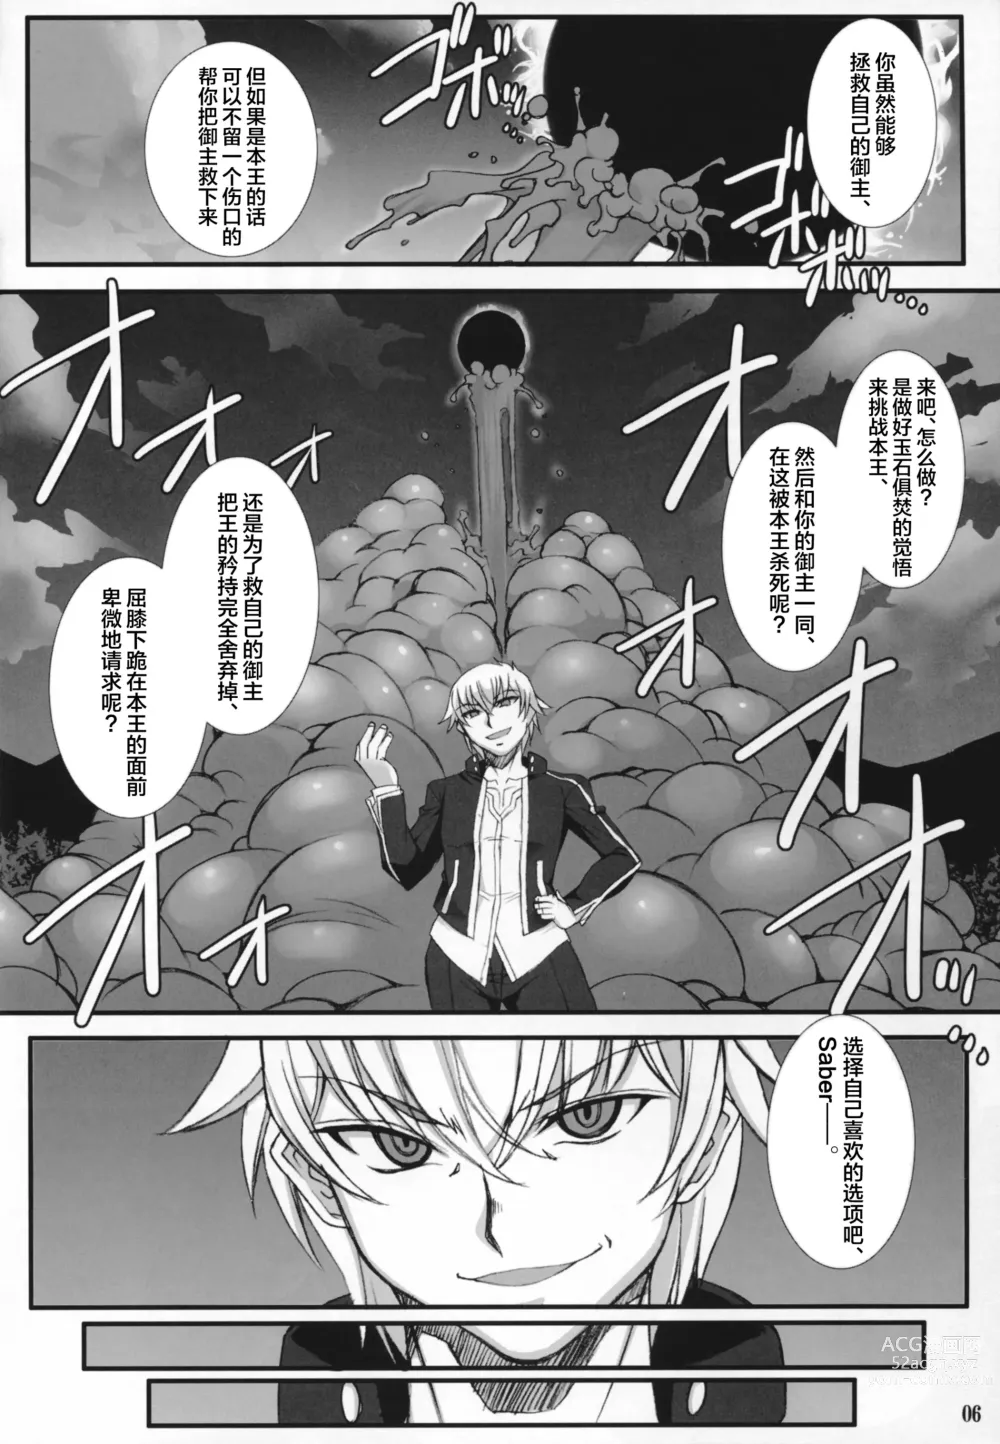 Page 6 of doujinshi Rin Kai -Kegasareta Aka-